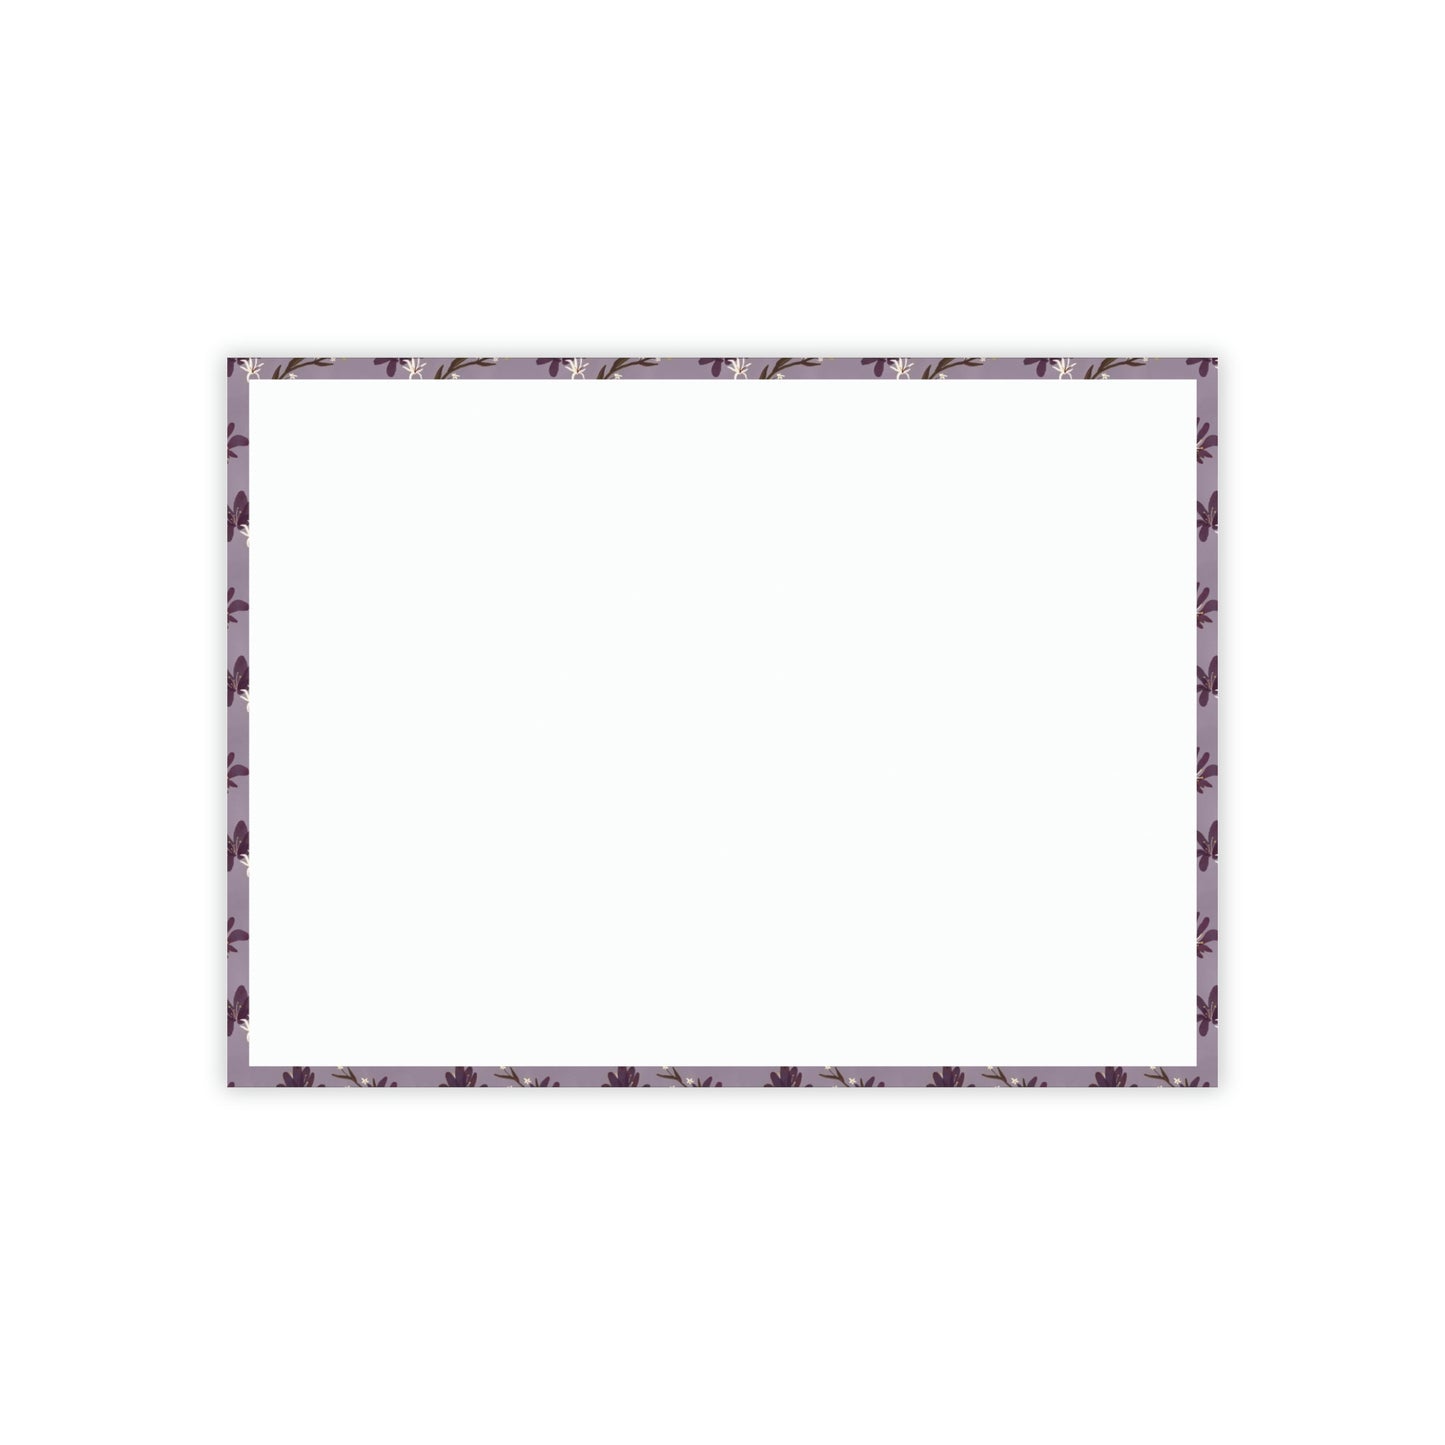 Purple Floral Post-it® Note Pads